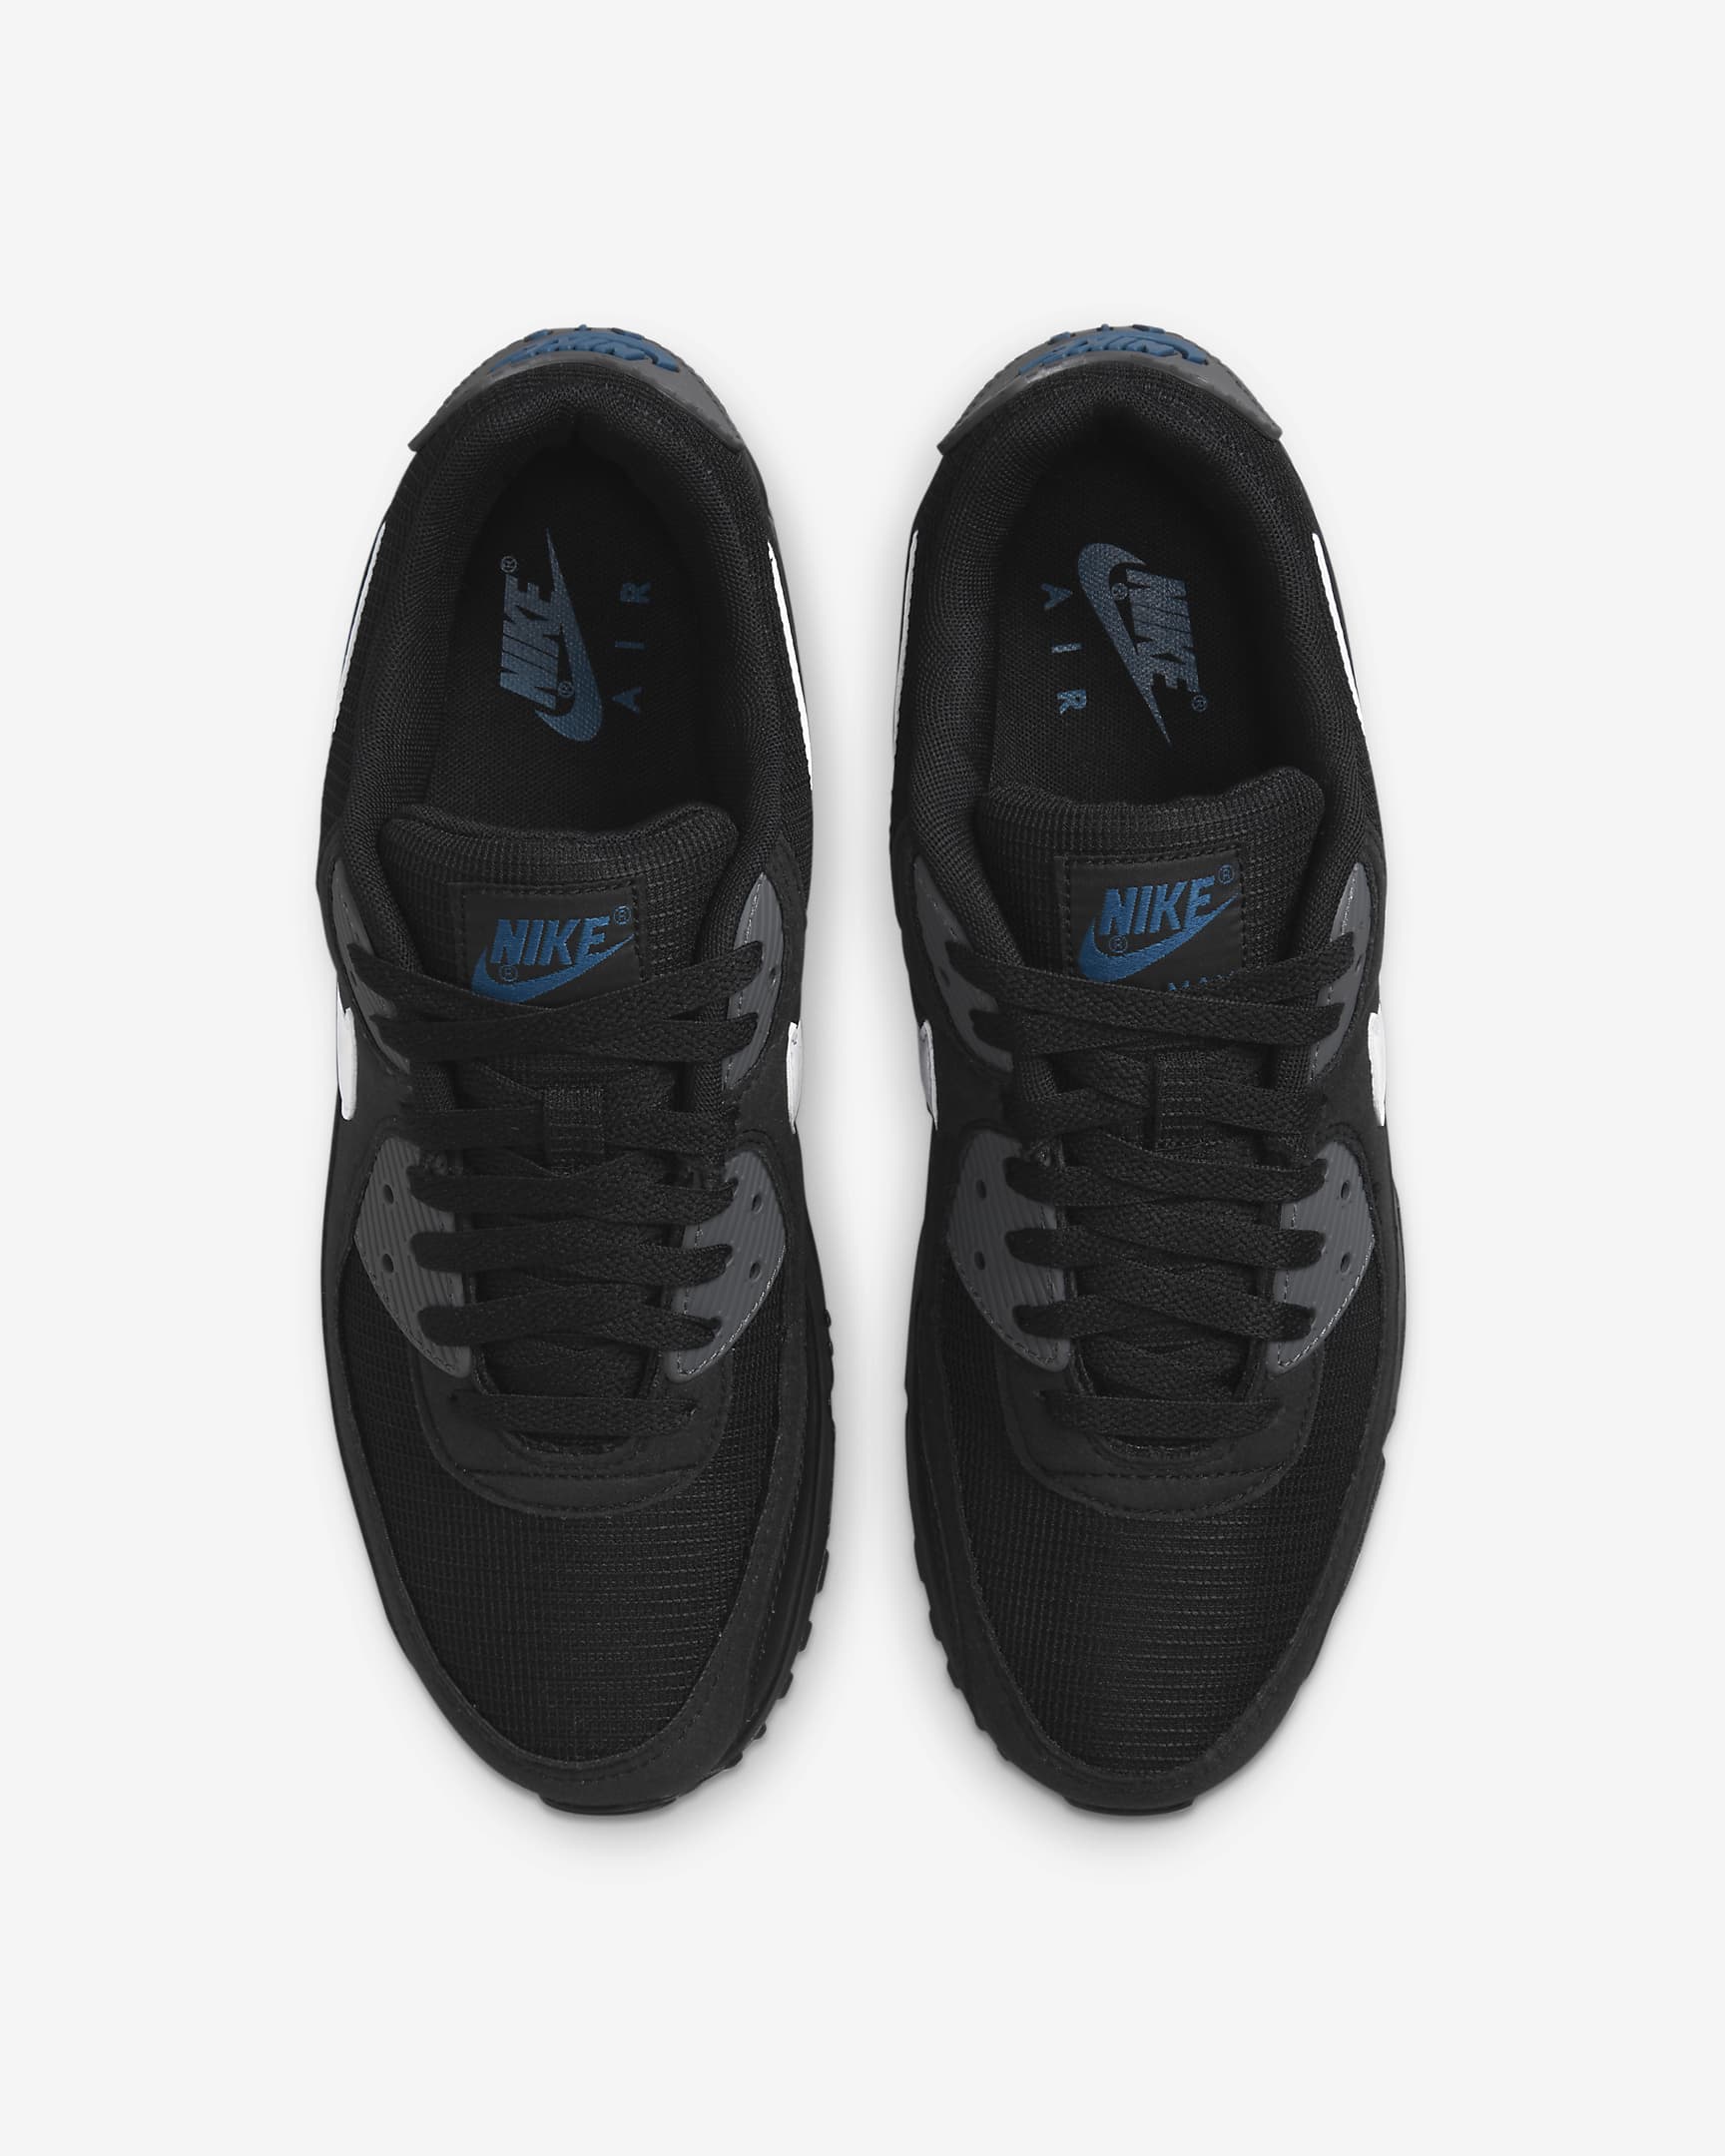 Nike Air Max 90 Men's Shoes - Black/Marina/Iron Grey/White